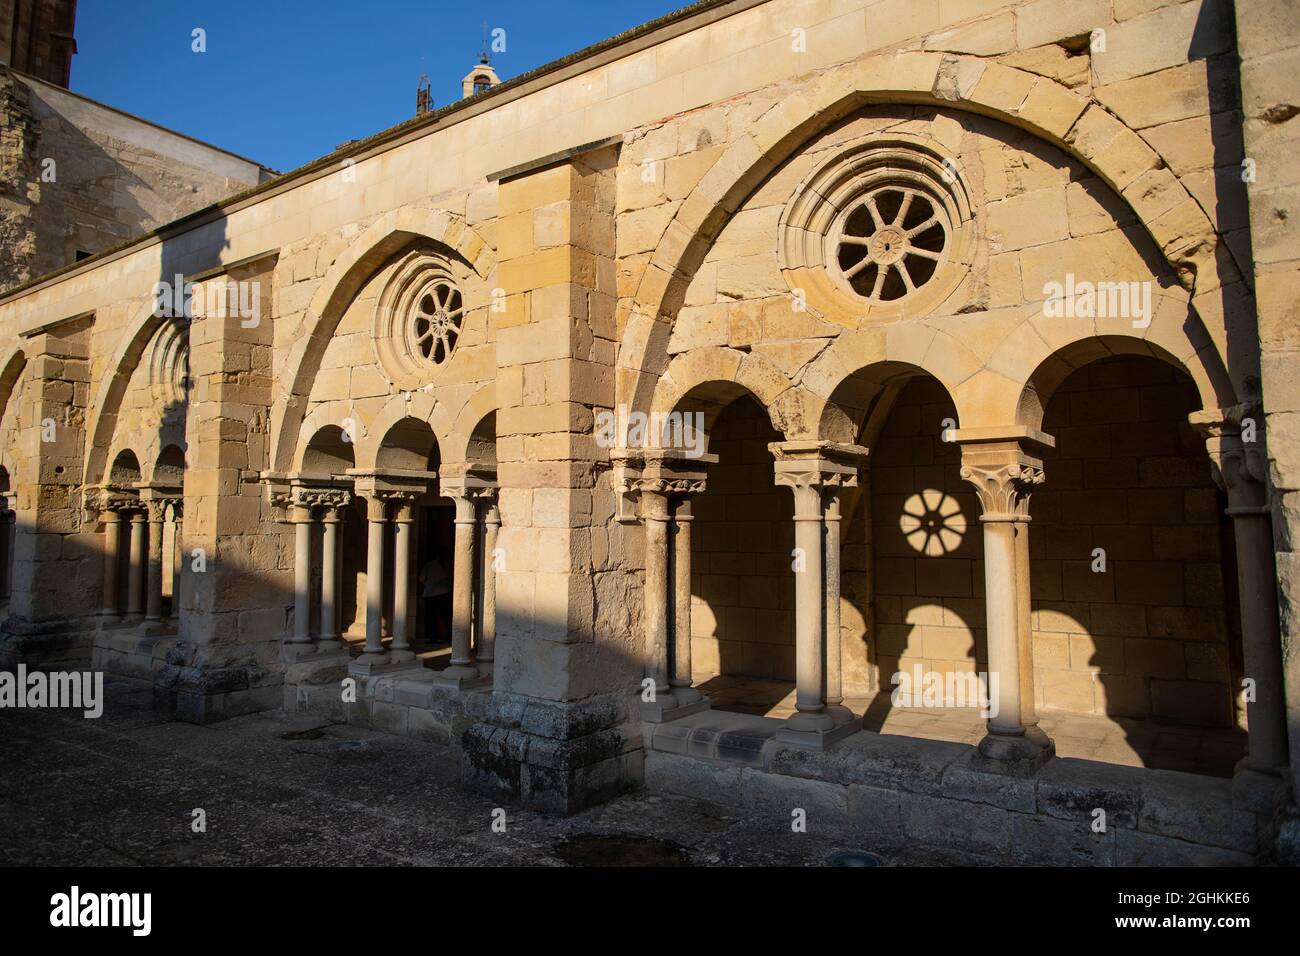 Cloister of Vallbona Abbey or the Monastery of Santa Maria de Vallbona. Vallbona de les Monges, Urgell, Lleida, Catalonia, Spain, Europe. Stock Photo